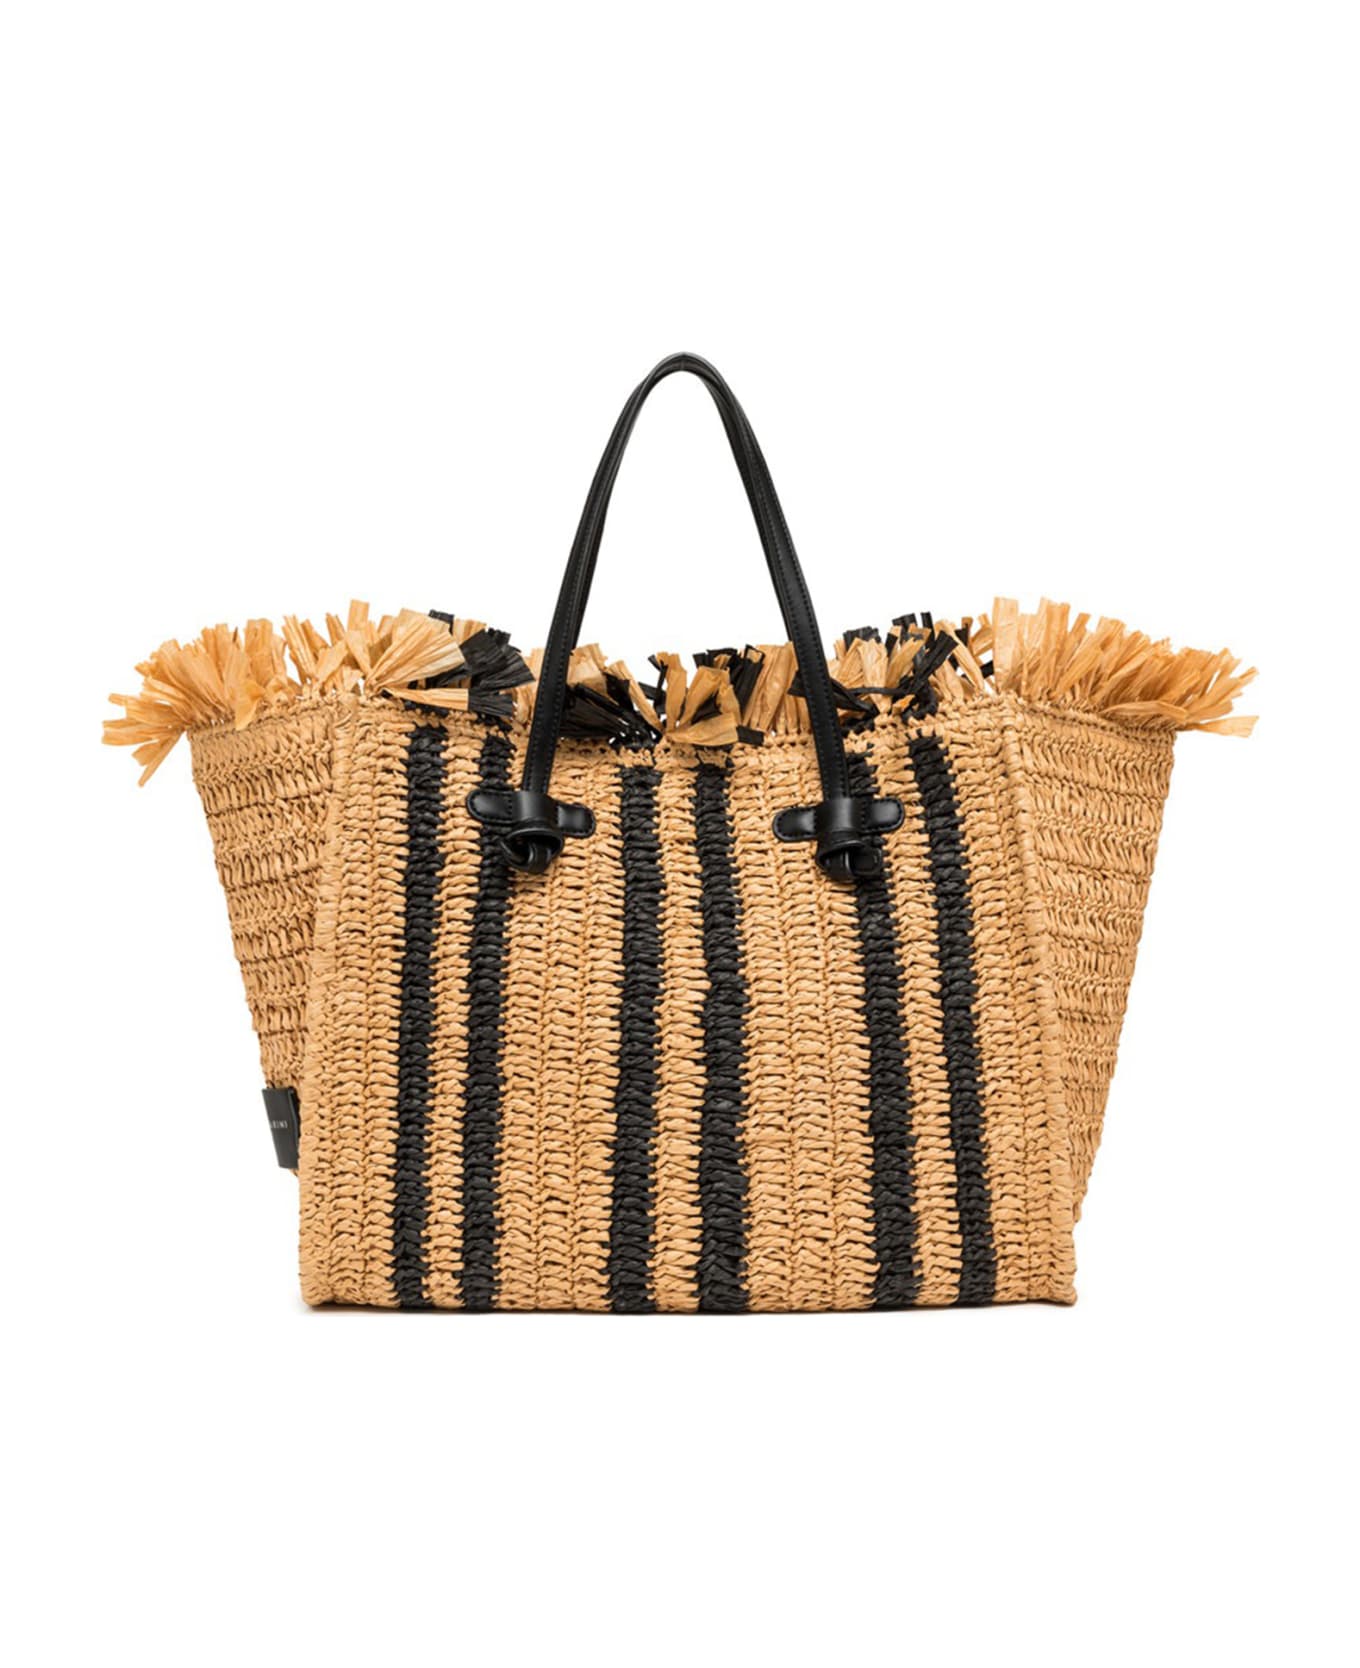 Gianni Chiarini Marcella Shopping Bag With Straw - NERO トートバッグ